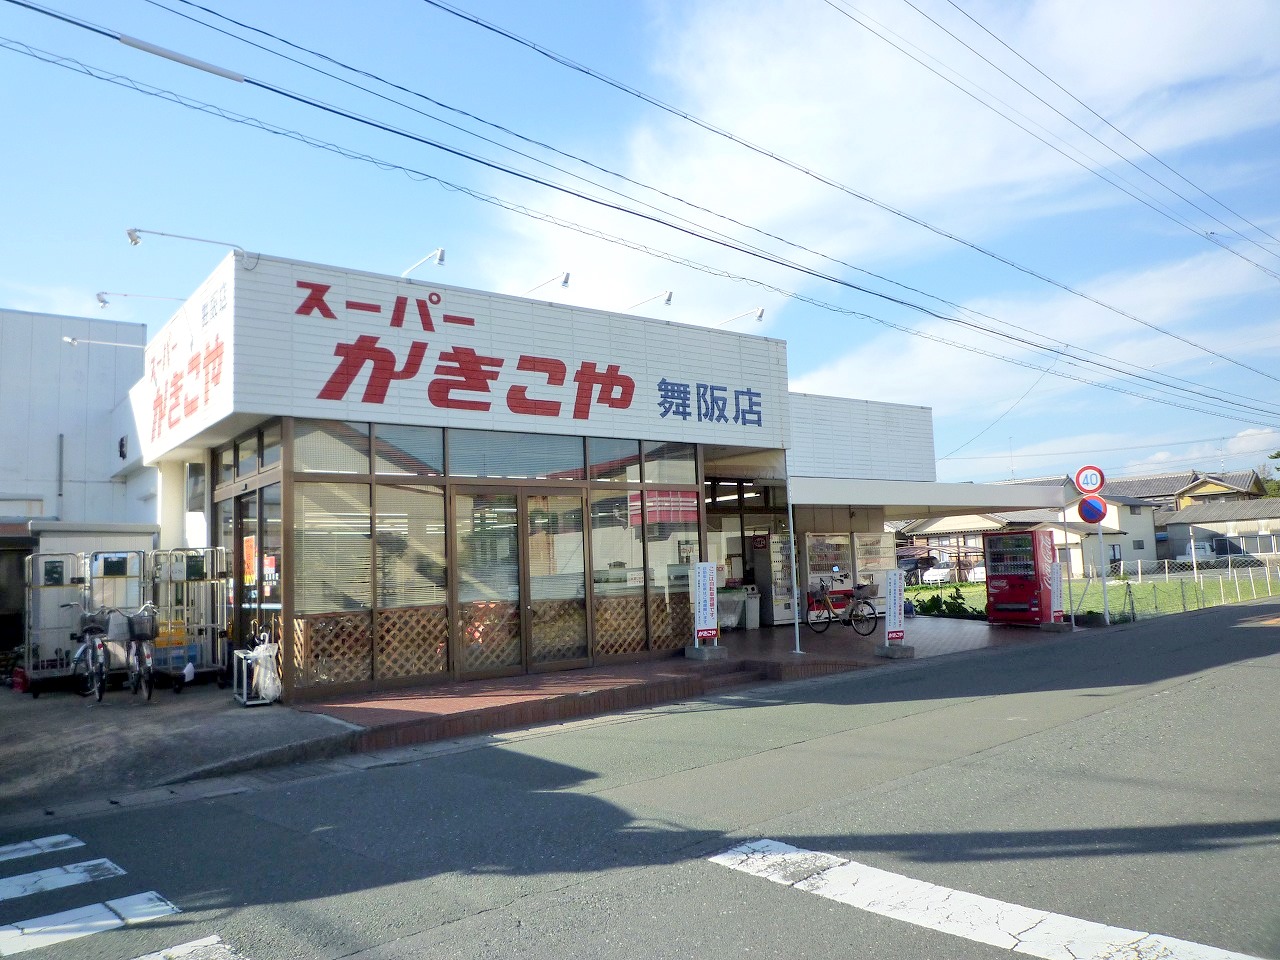 Supermarket. Kakiko and Maisaka store up to (super) 384m